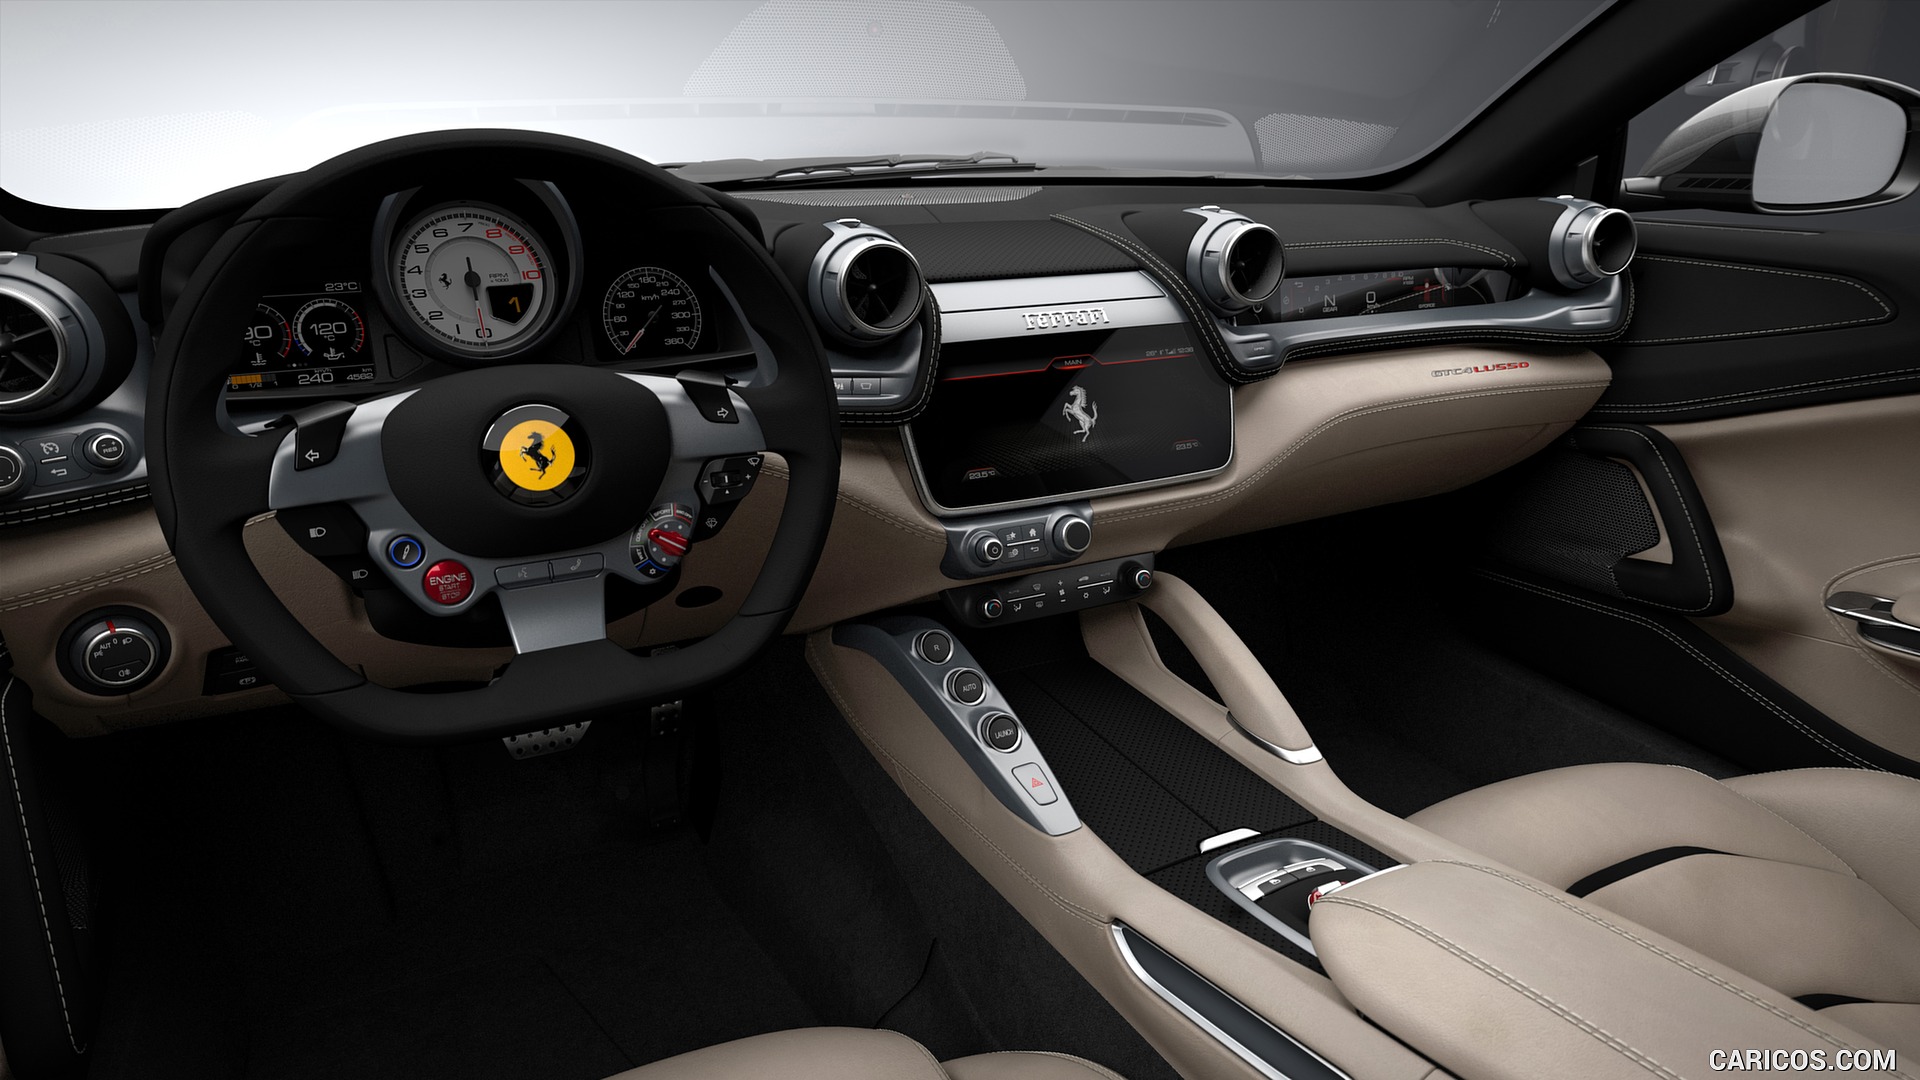 Ferrari Gtc4lusso Interior Cockpit HD Wallpaper